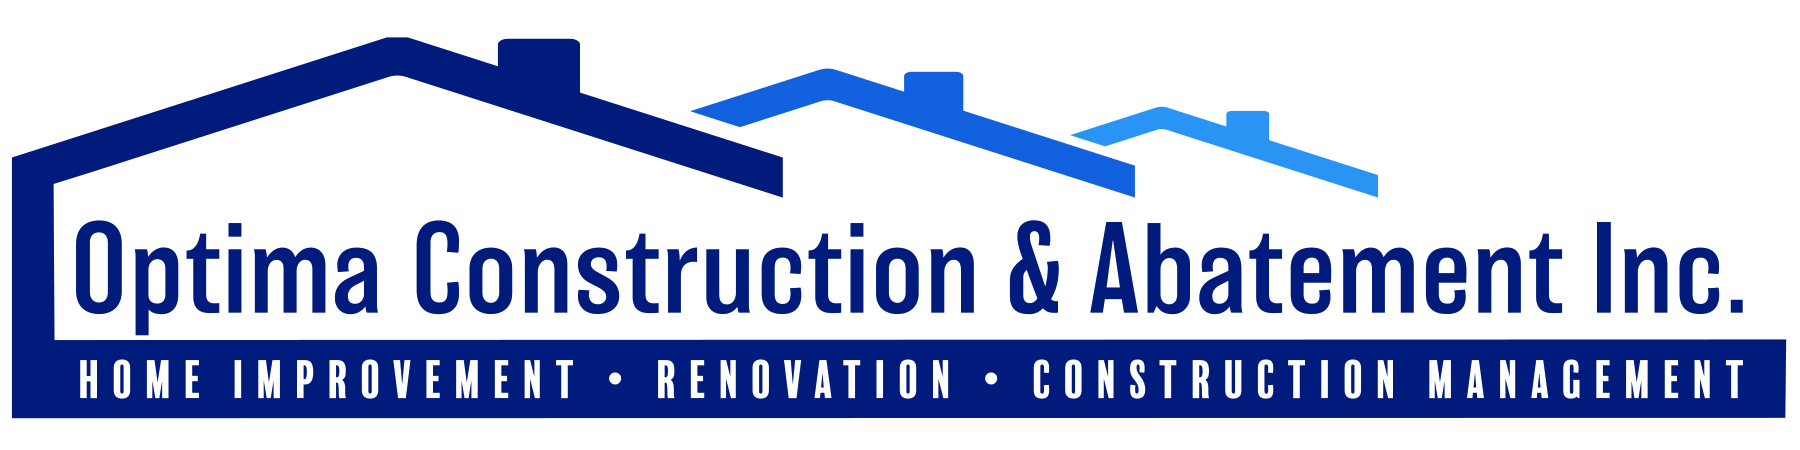 Optima Construction & Abatement, Inc. Logo